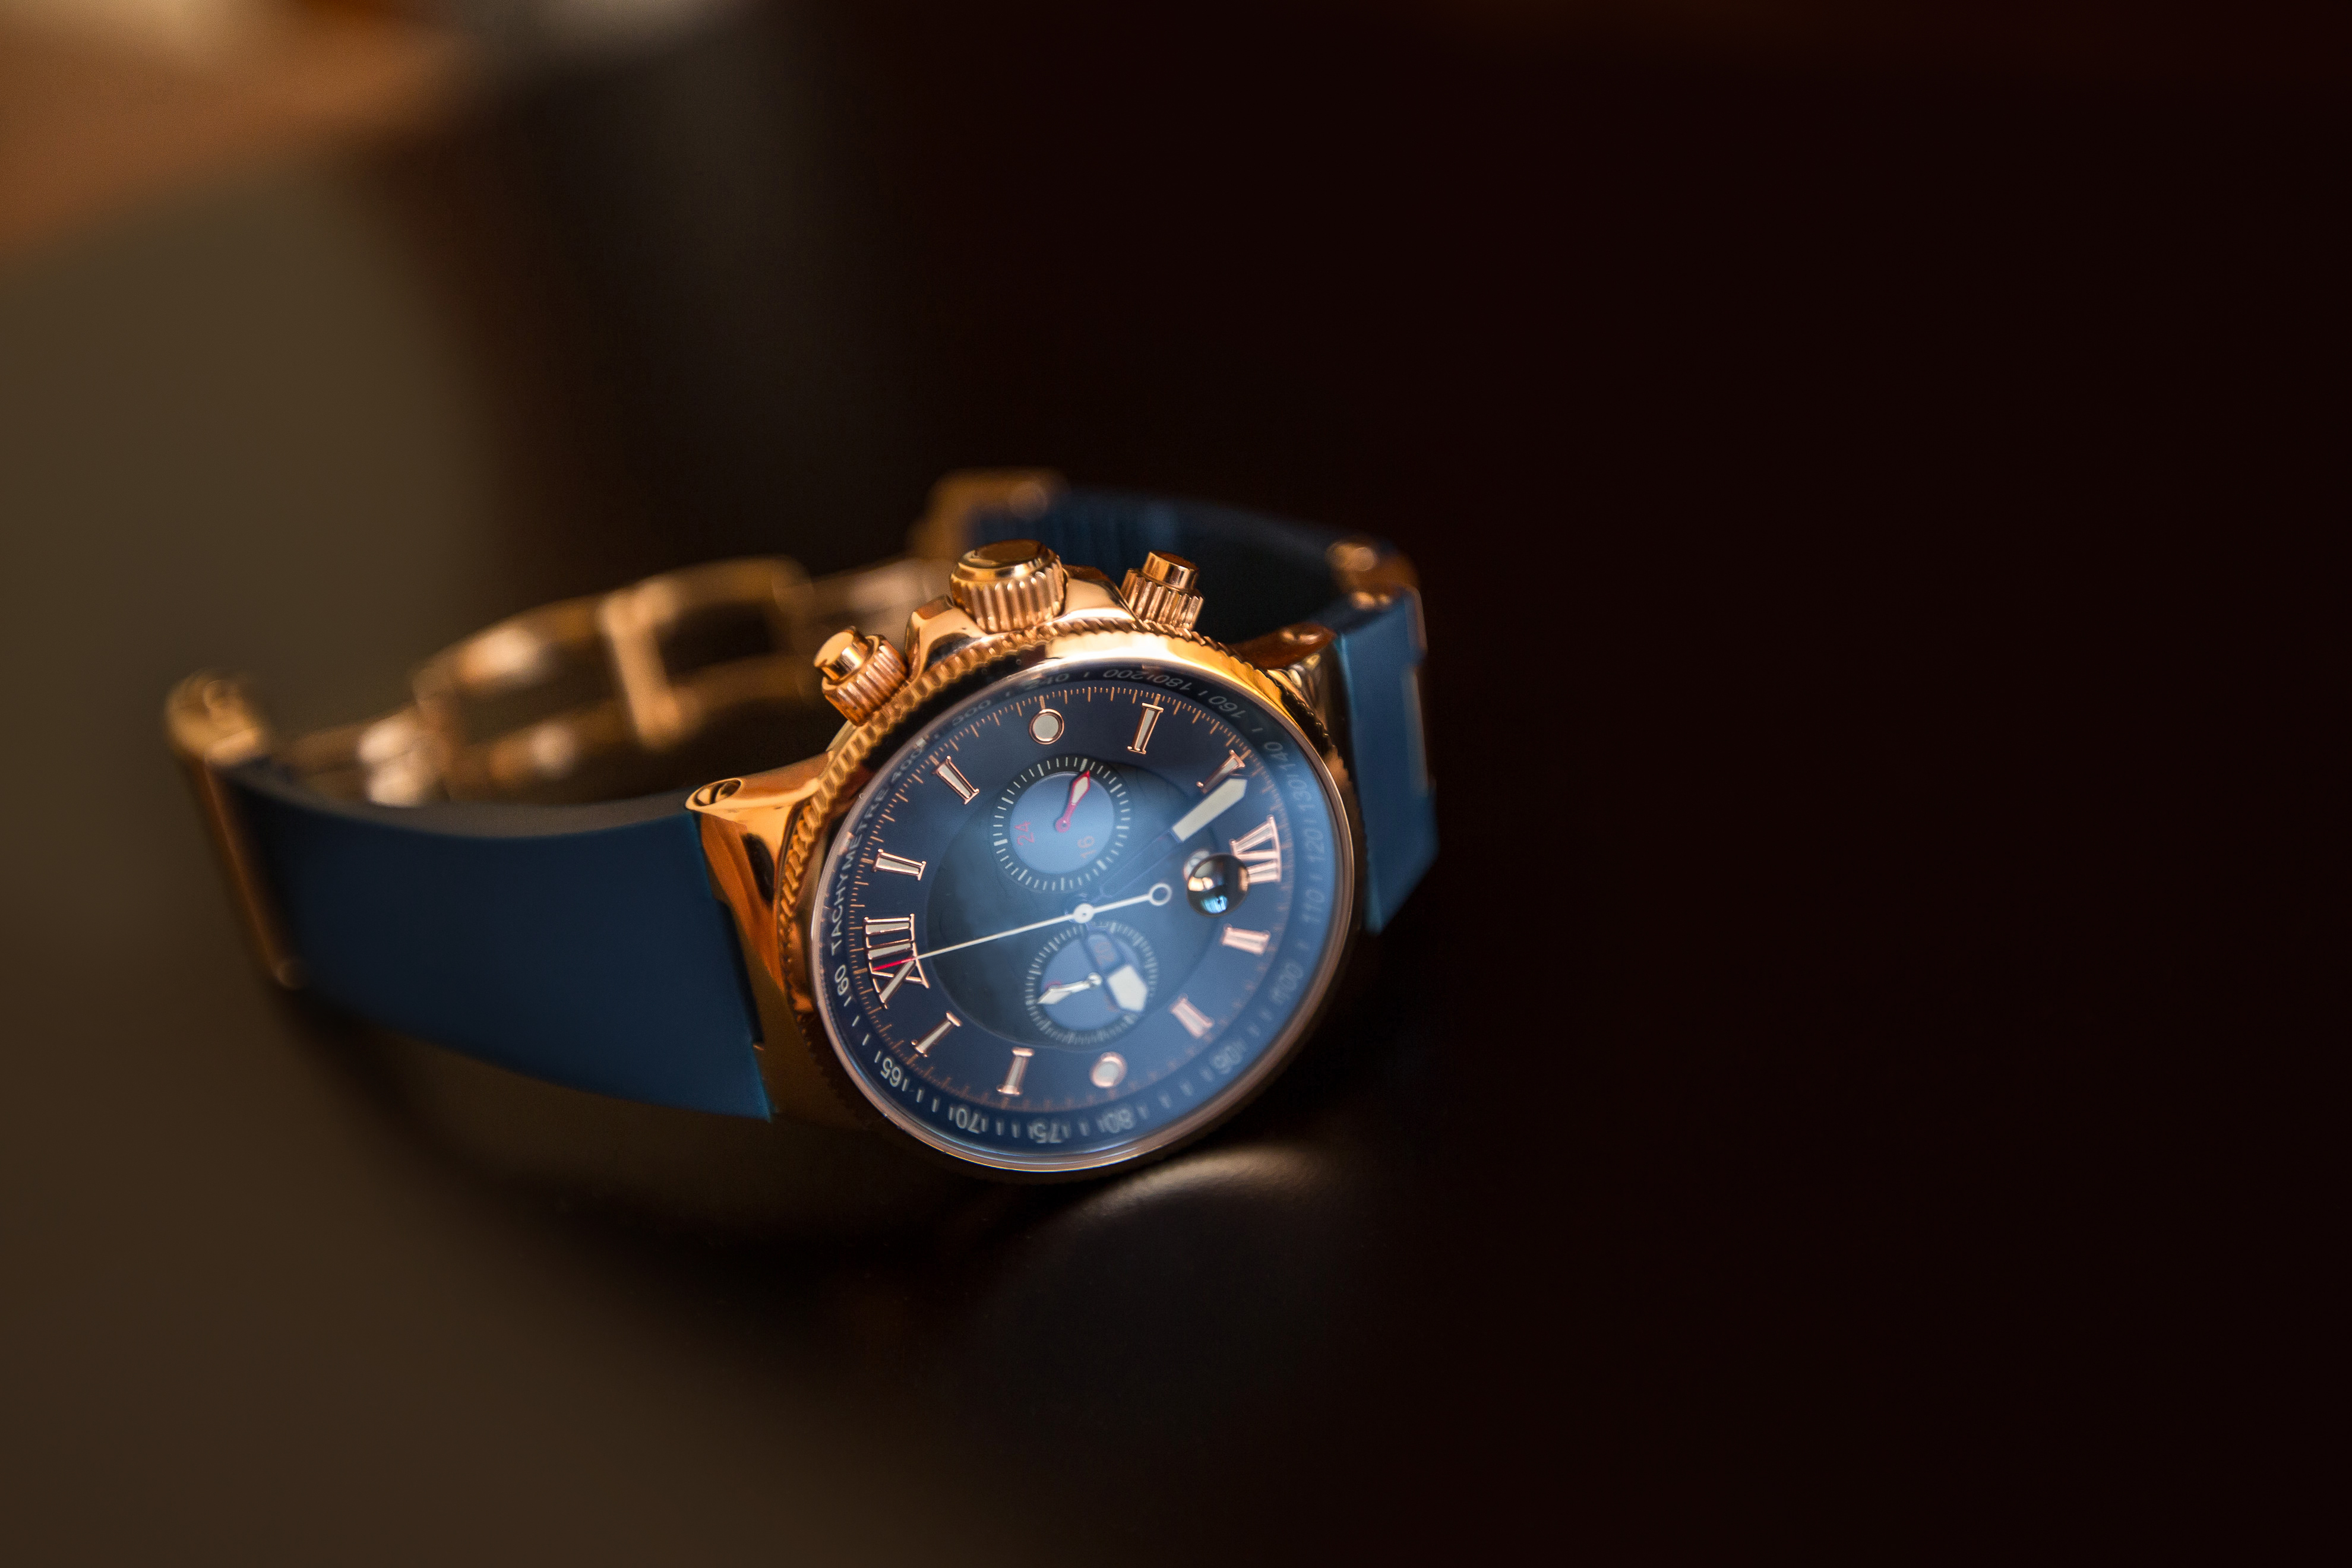 Reloj de hombre, primer plano de reloj de mano dorado. | Fuente: Shutterstock